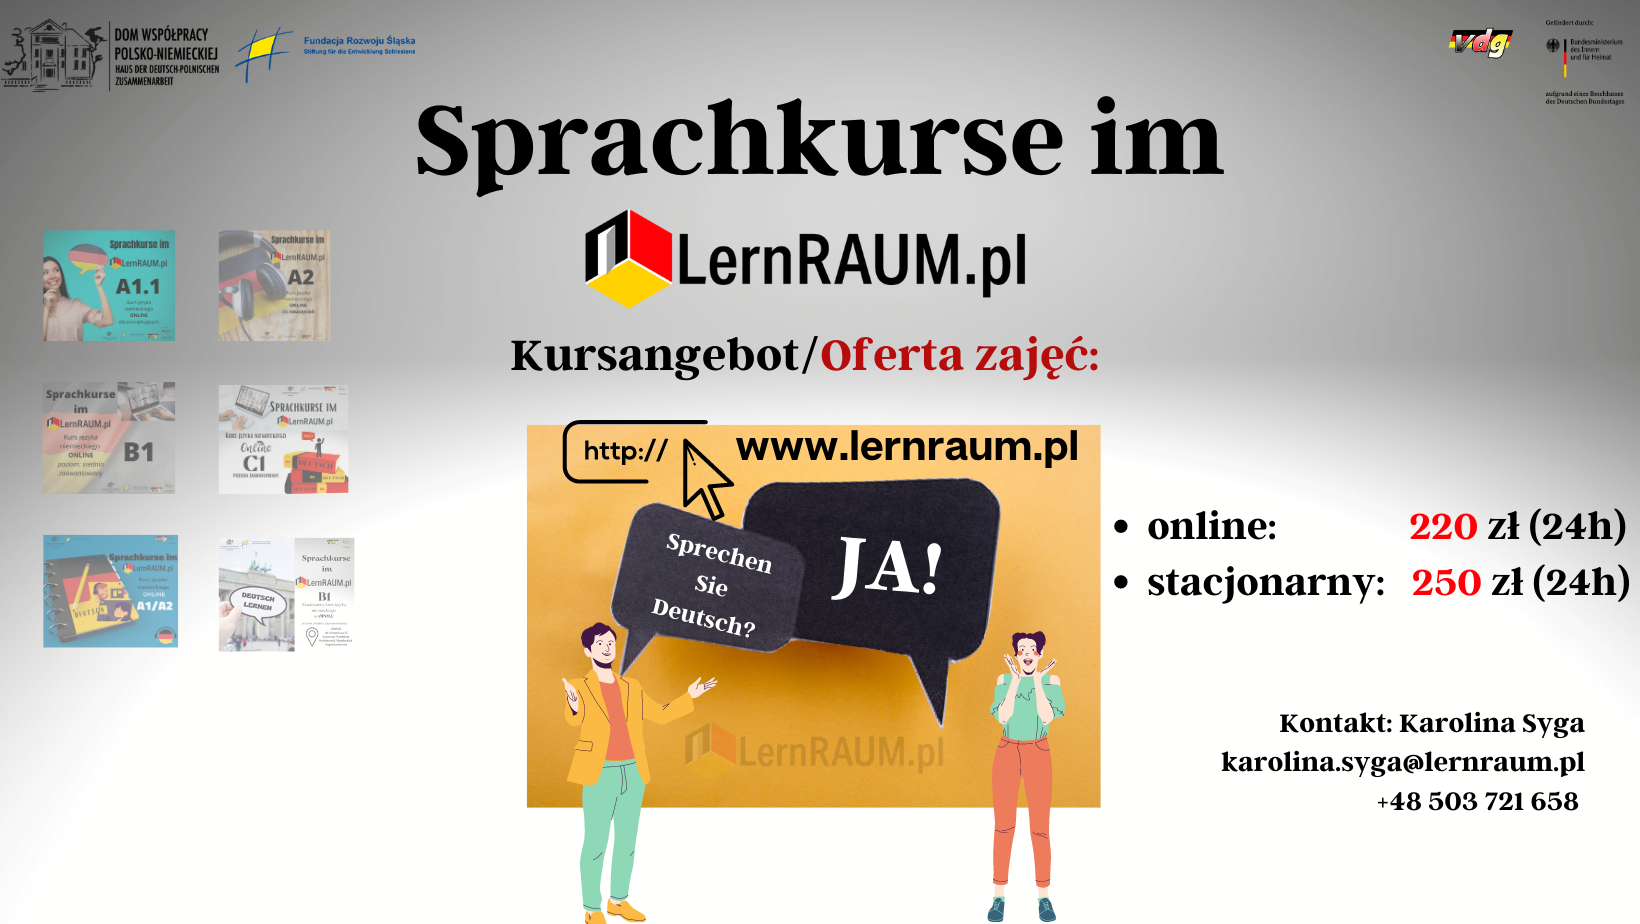 Sprachkurse im LernRAUM. pl!